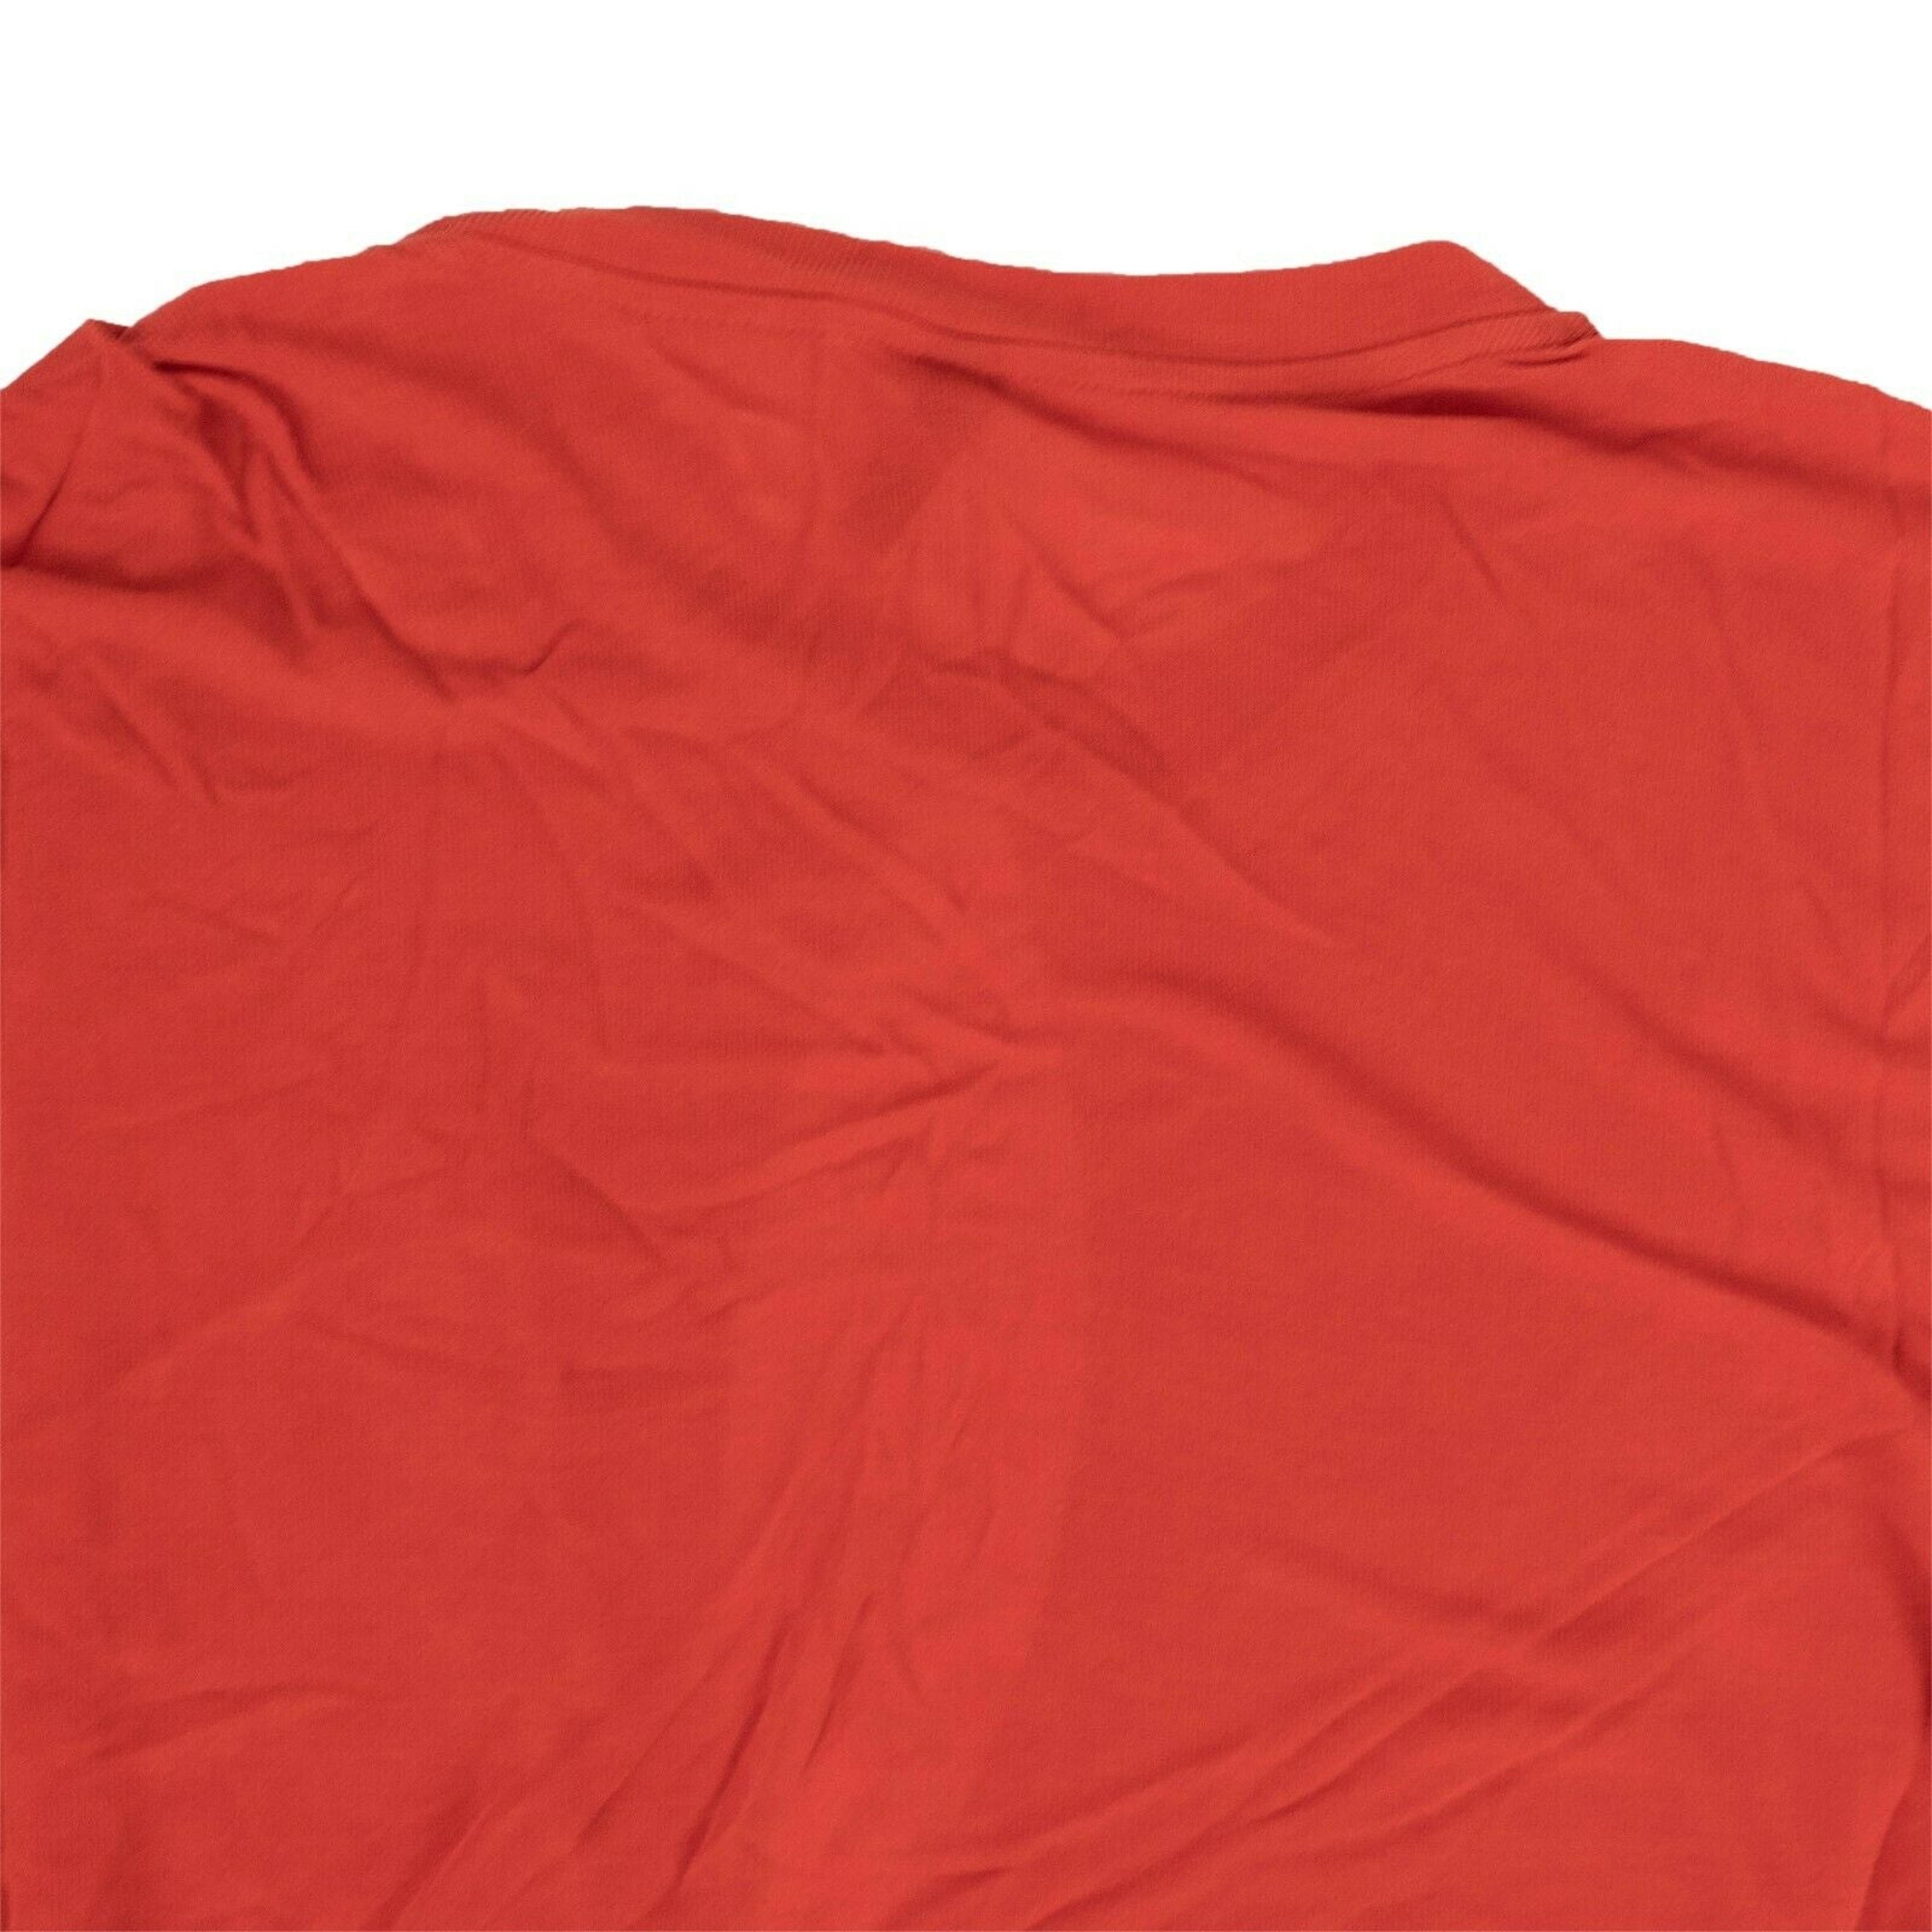 Alternate View 3 of Red Silk Draped T-Shirt